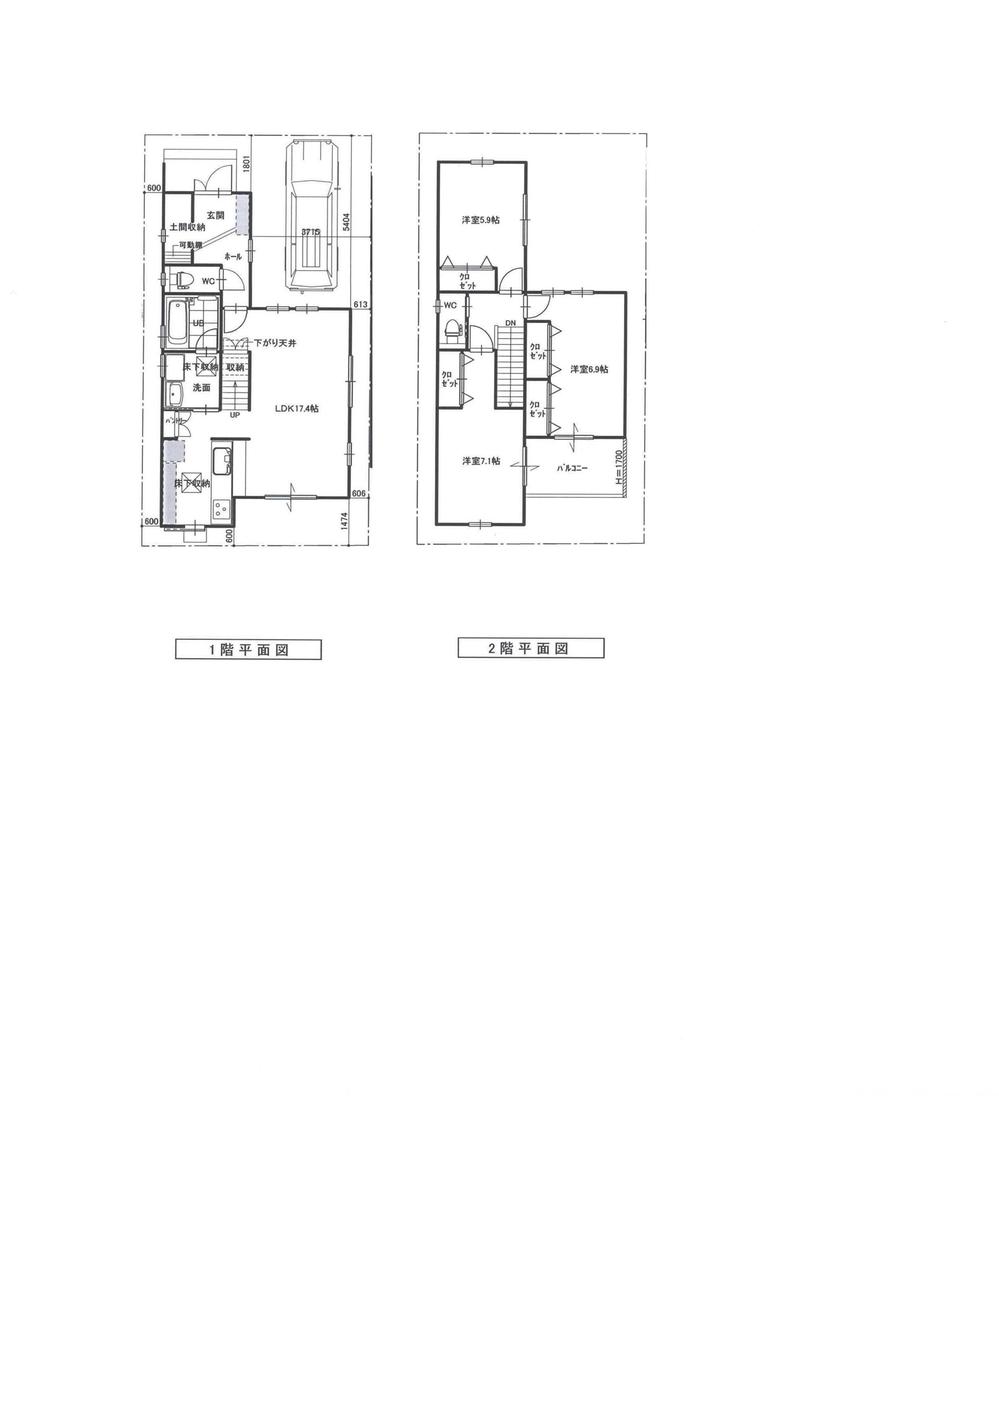 Building plan example (floor plan). Reference Plan